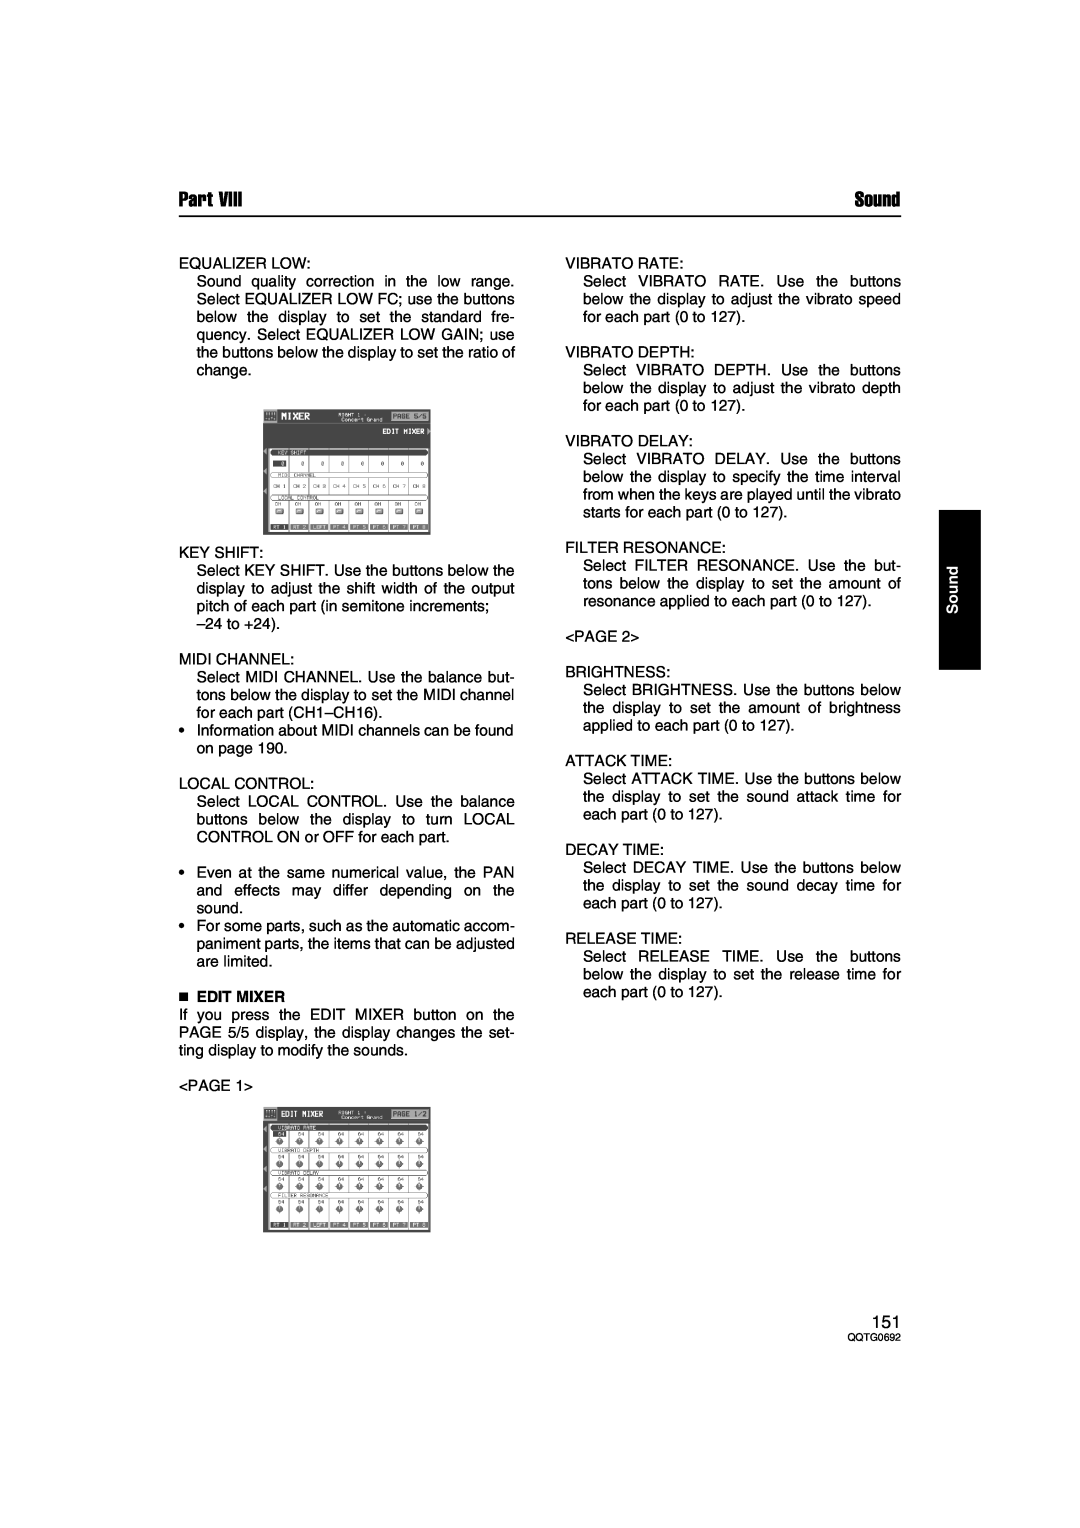 Panasonic SX-KN2400, SX-KN2600 manual Edit Mixer, Part, Sound 